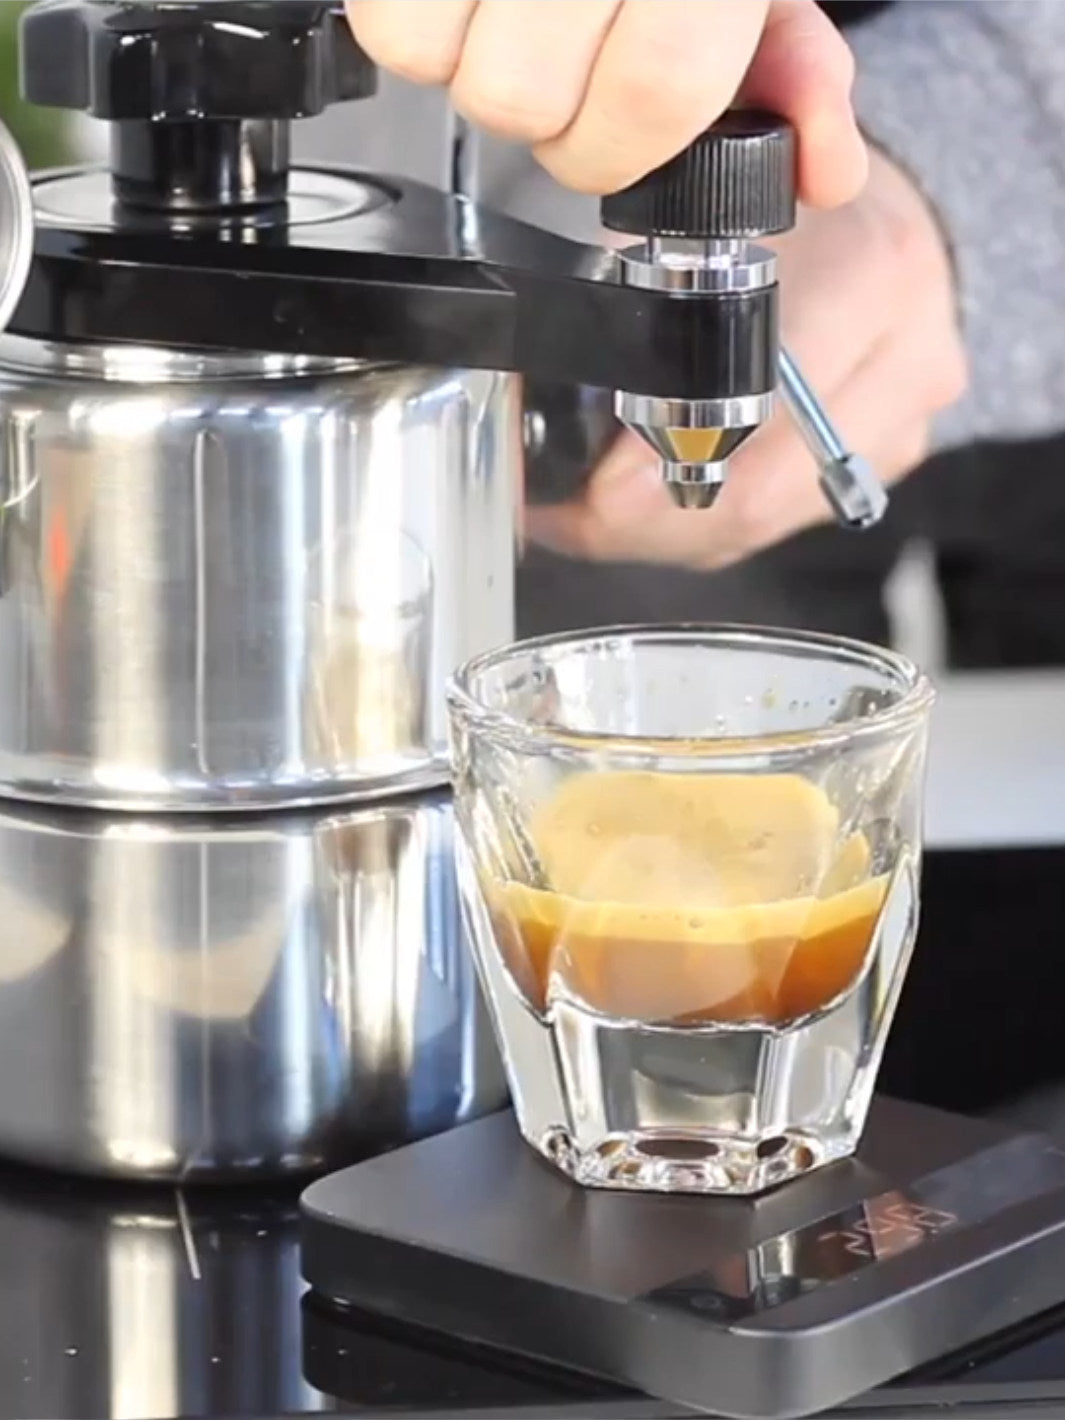 BELLMAN Stovetop Espresso & Cappuccino Maker with Pressure Gauge – Someware